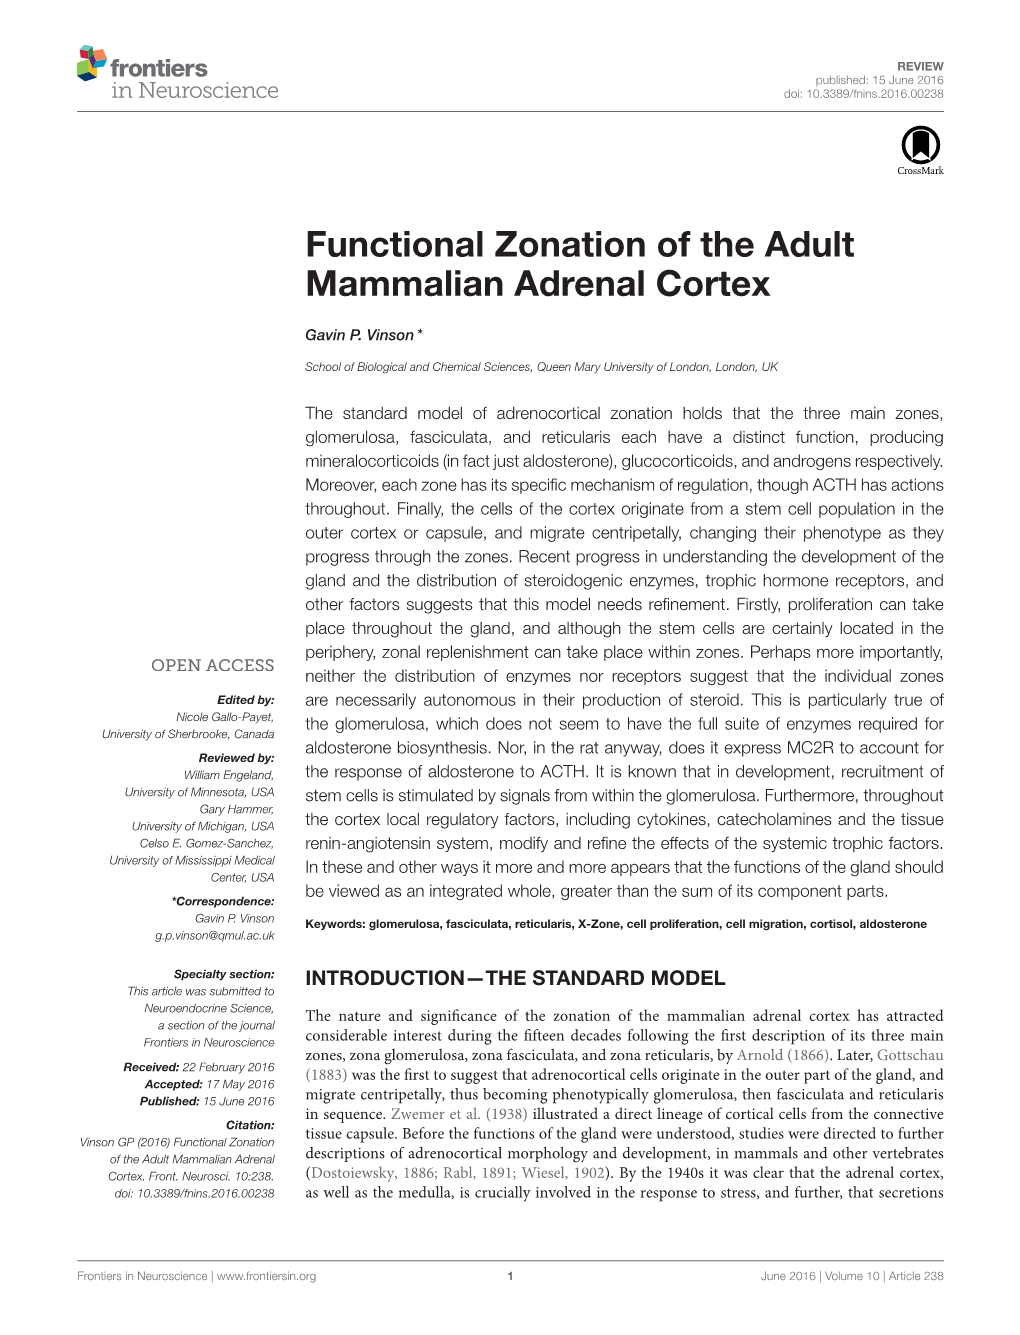 Functional Zonation of the Adult Mammalian Adrenal Cortex